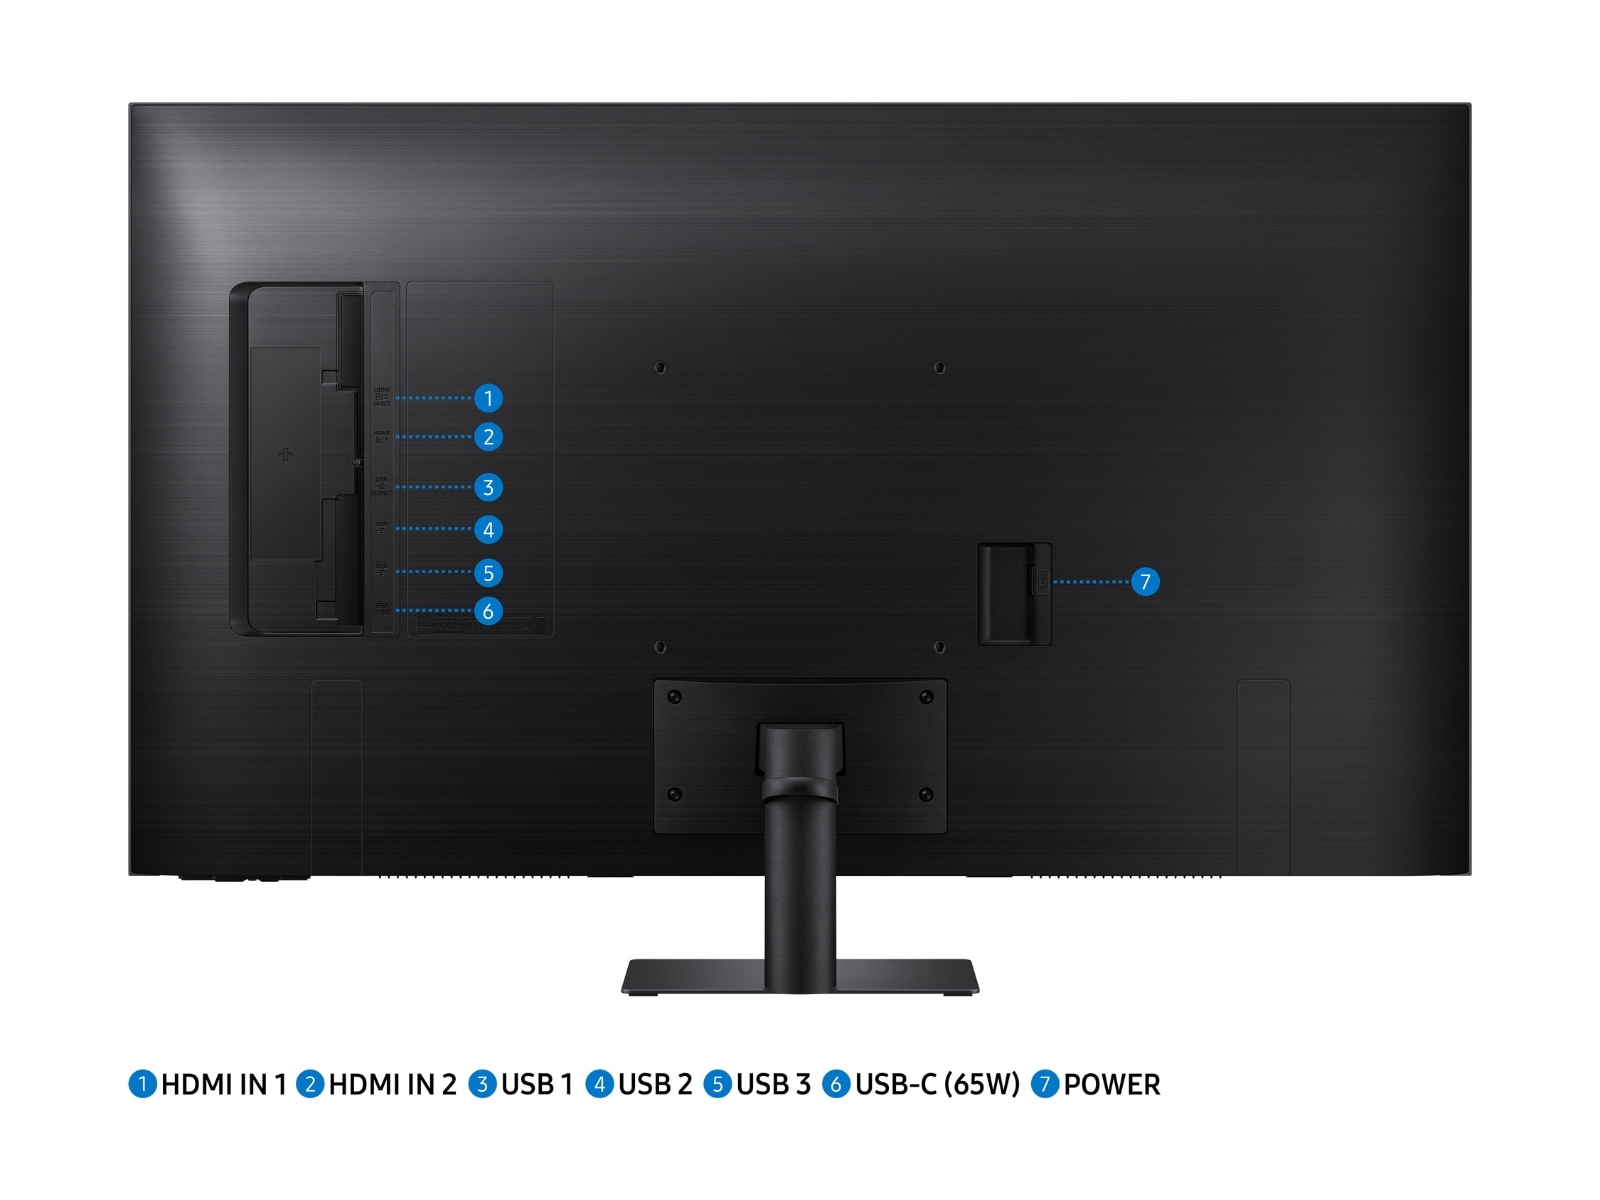 Monitor gamer de 32 pulgadas con pantalla Ultra HD 4K 3840x2160 Píxeles LED  4 ms Samsung